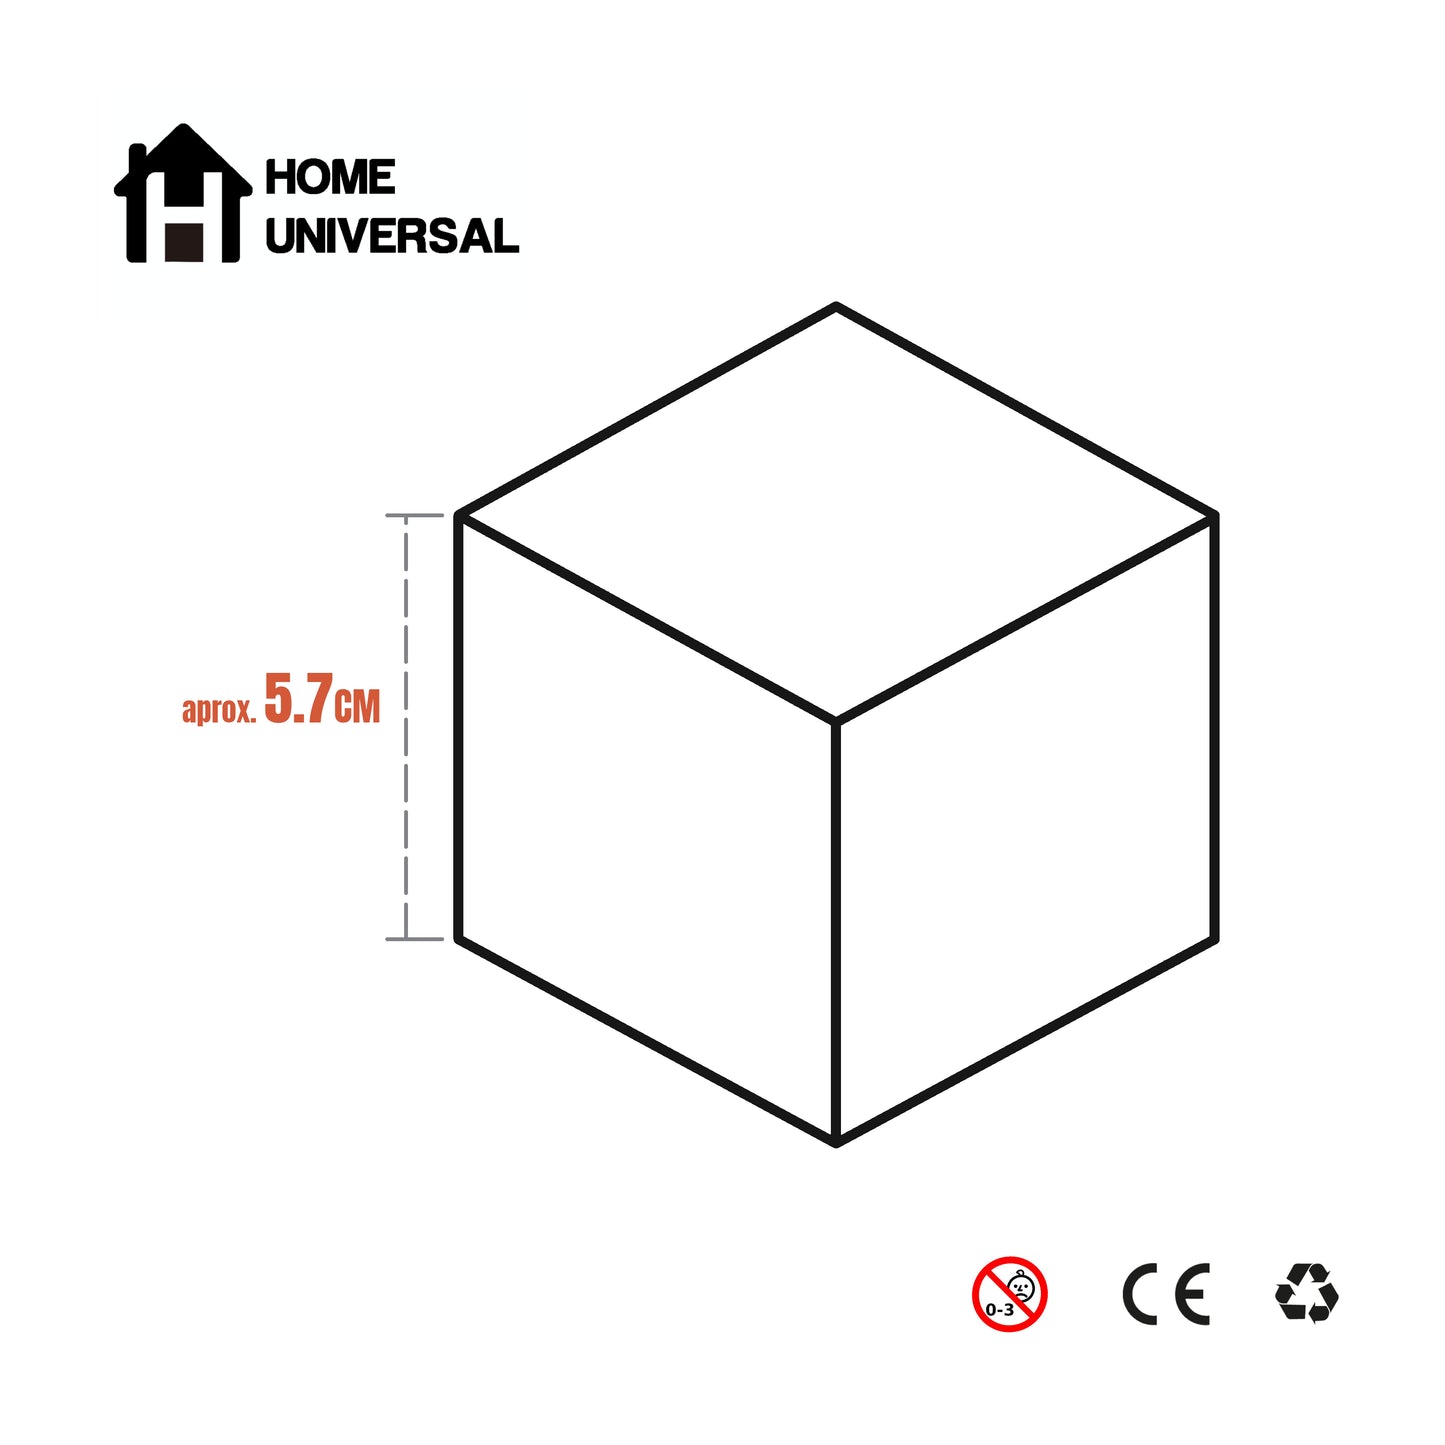 Home UNIVERSAL | Cubo Rompecabezas (4x4x4 Sin Pegatina)